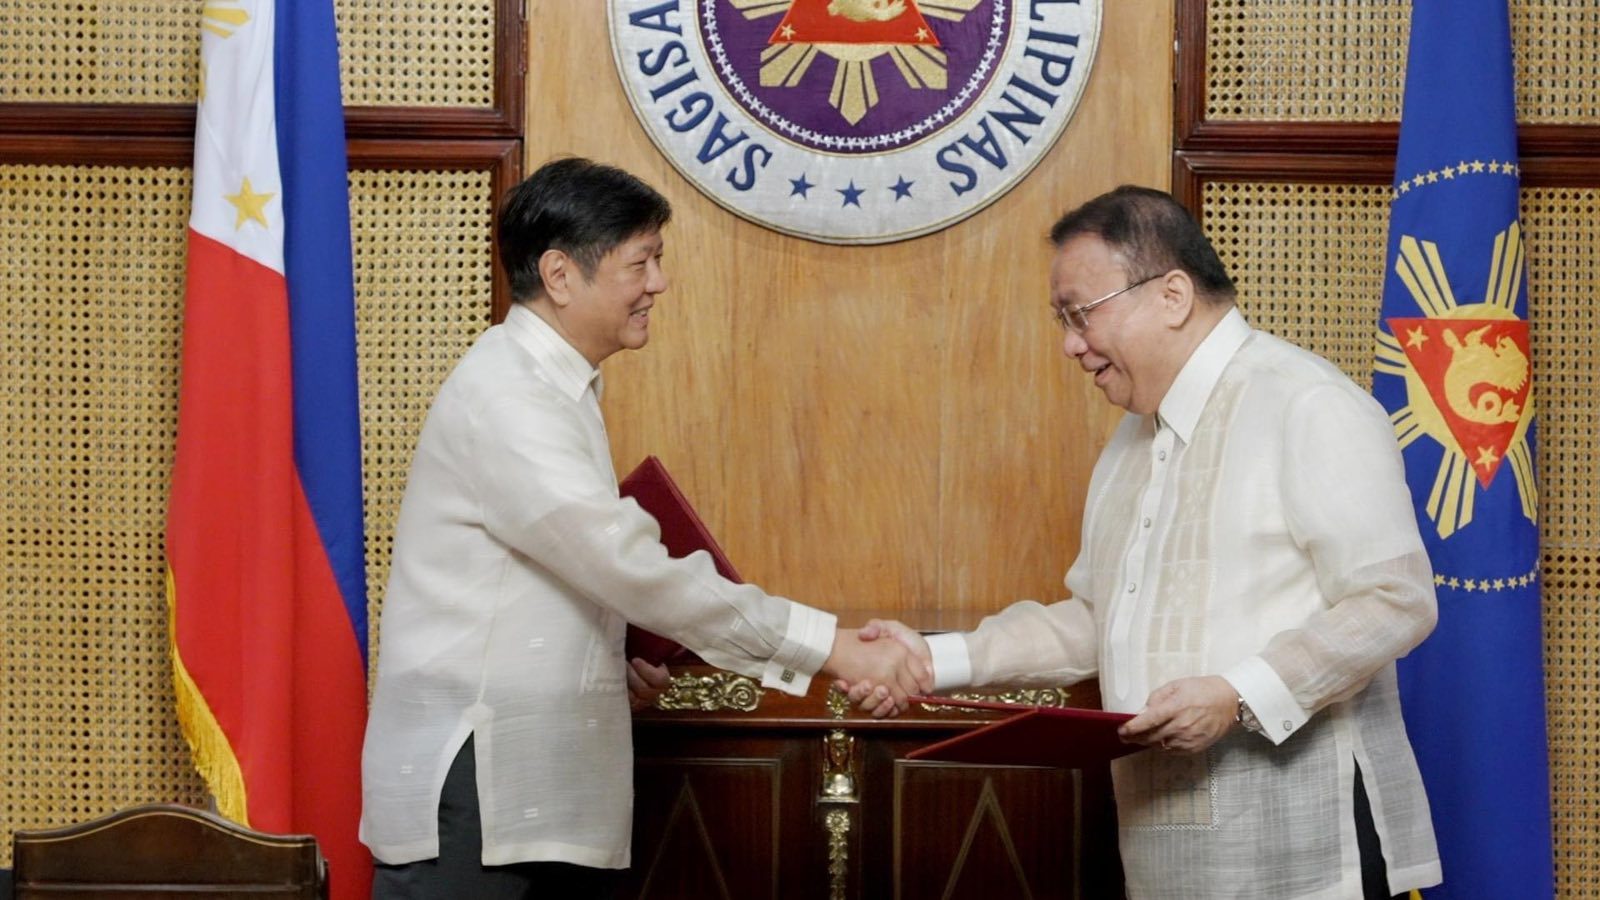 Bersamin circular expands powers of Marcos administration OICs